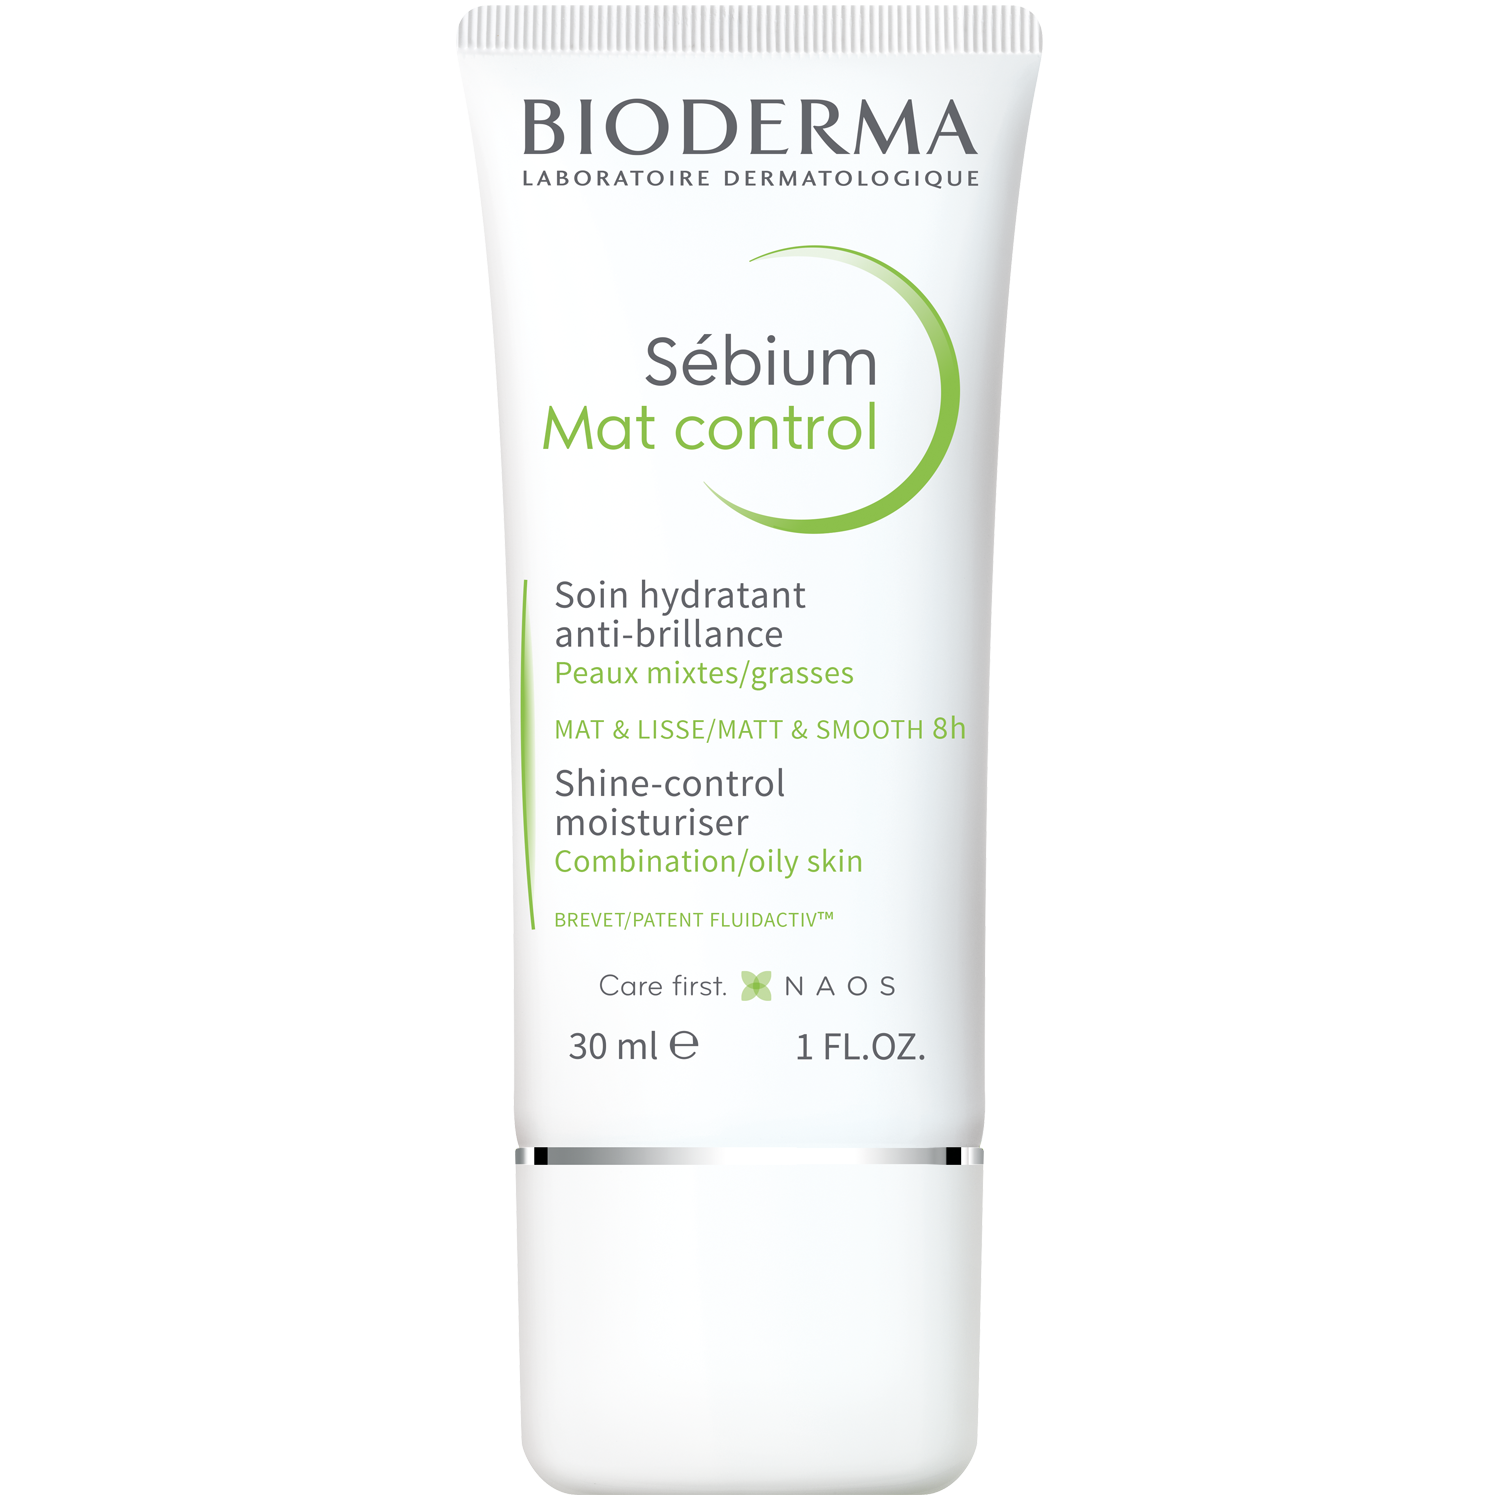 Bioderma Sebium Mat Control матирующий крем для лица, 30 мл bioderma матирующее средство sebium mat control 30 мл